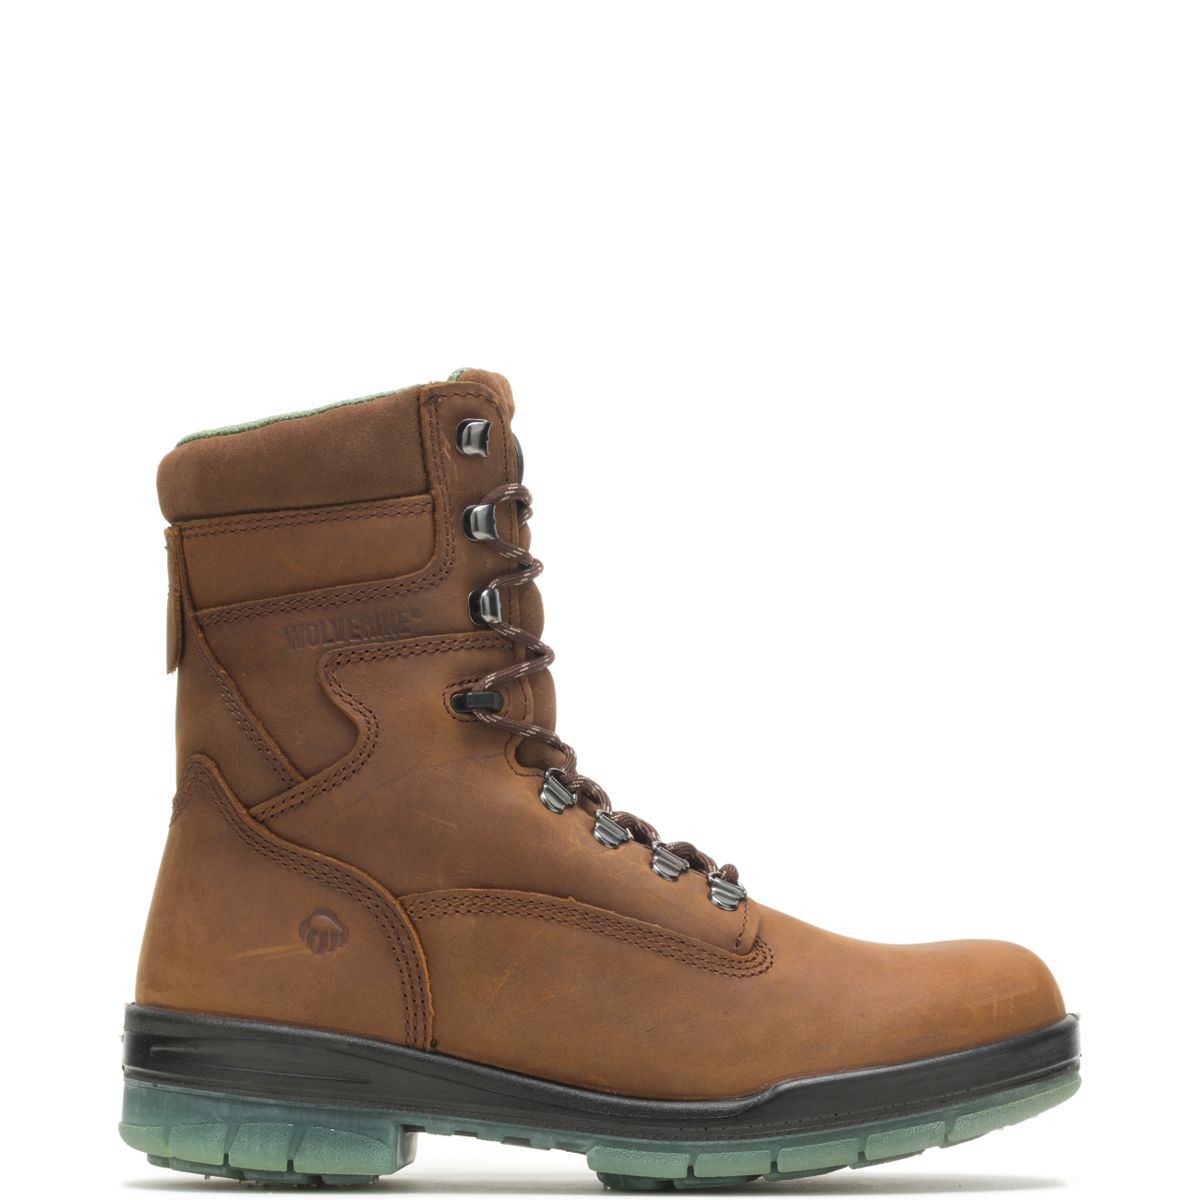 mens steel toe waterproof insulated boots